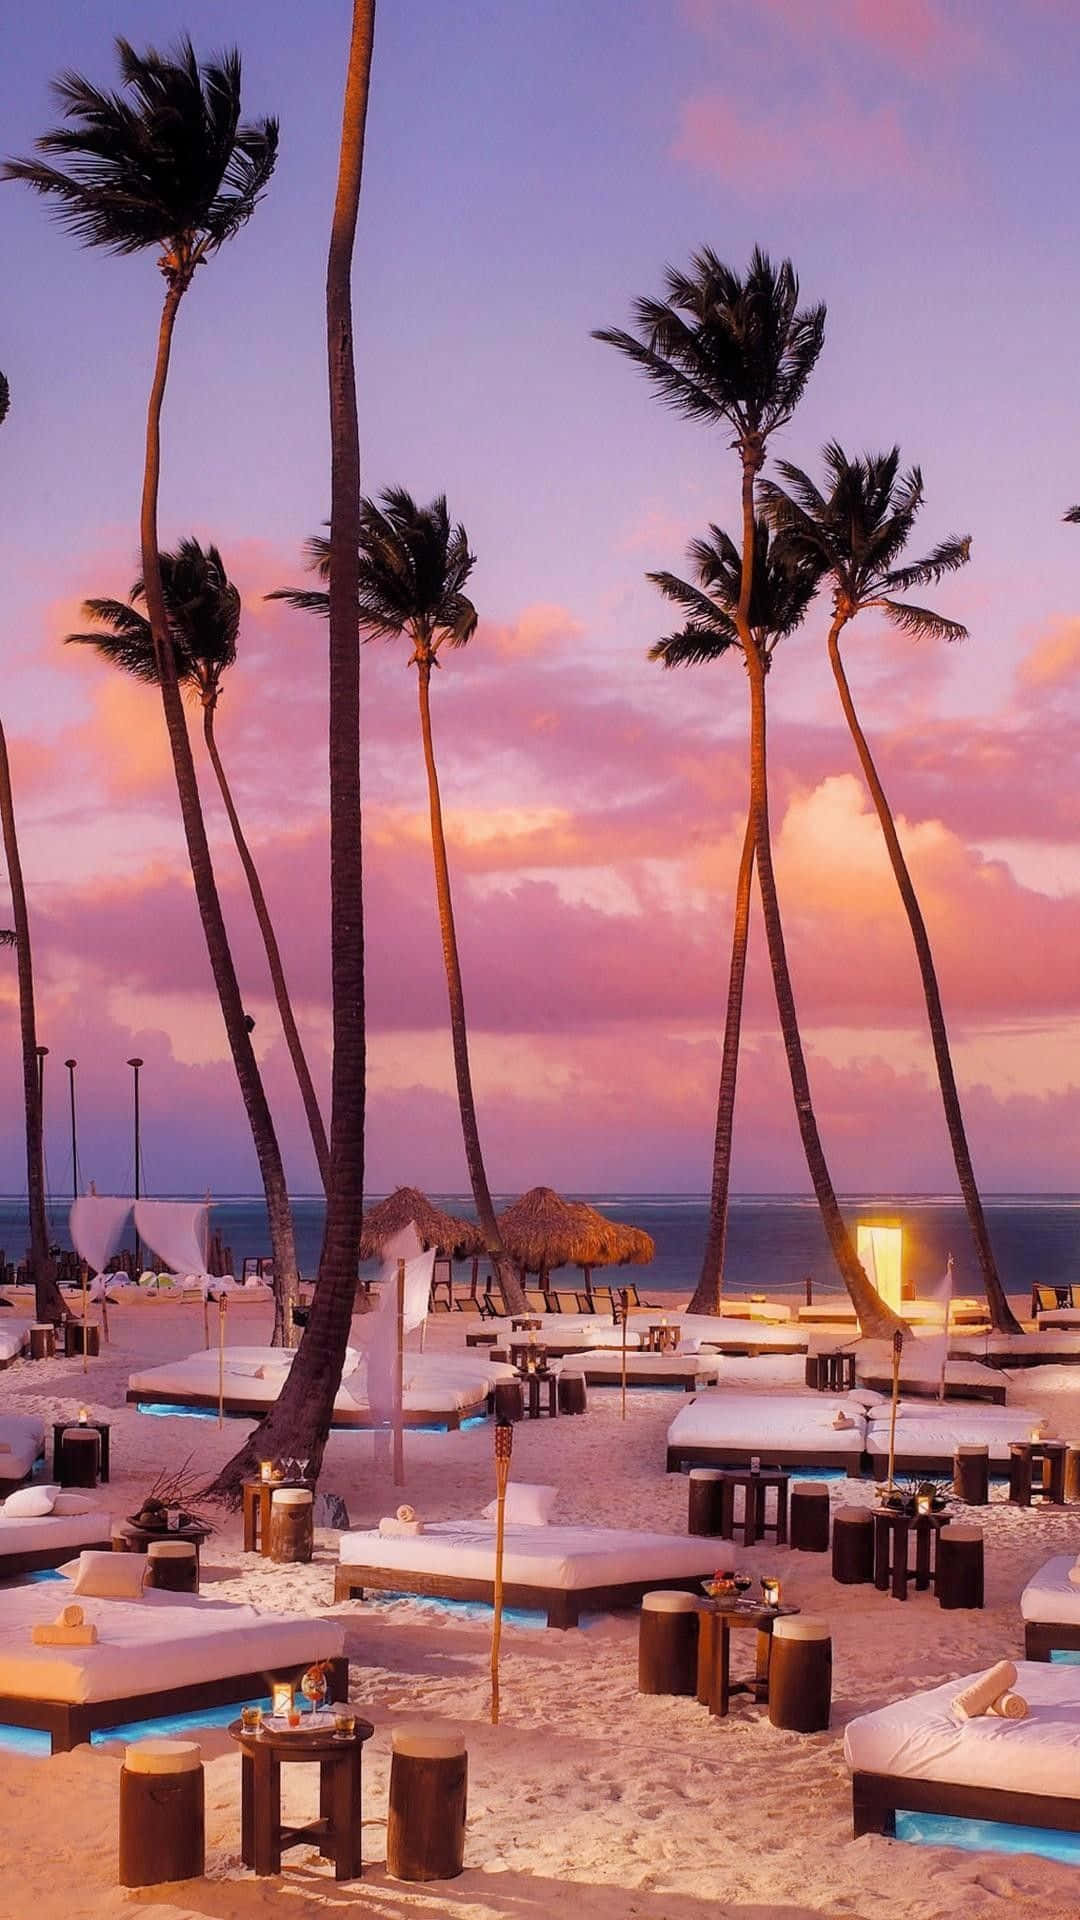 En strand med palmer og liggestole Wallpaper